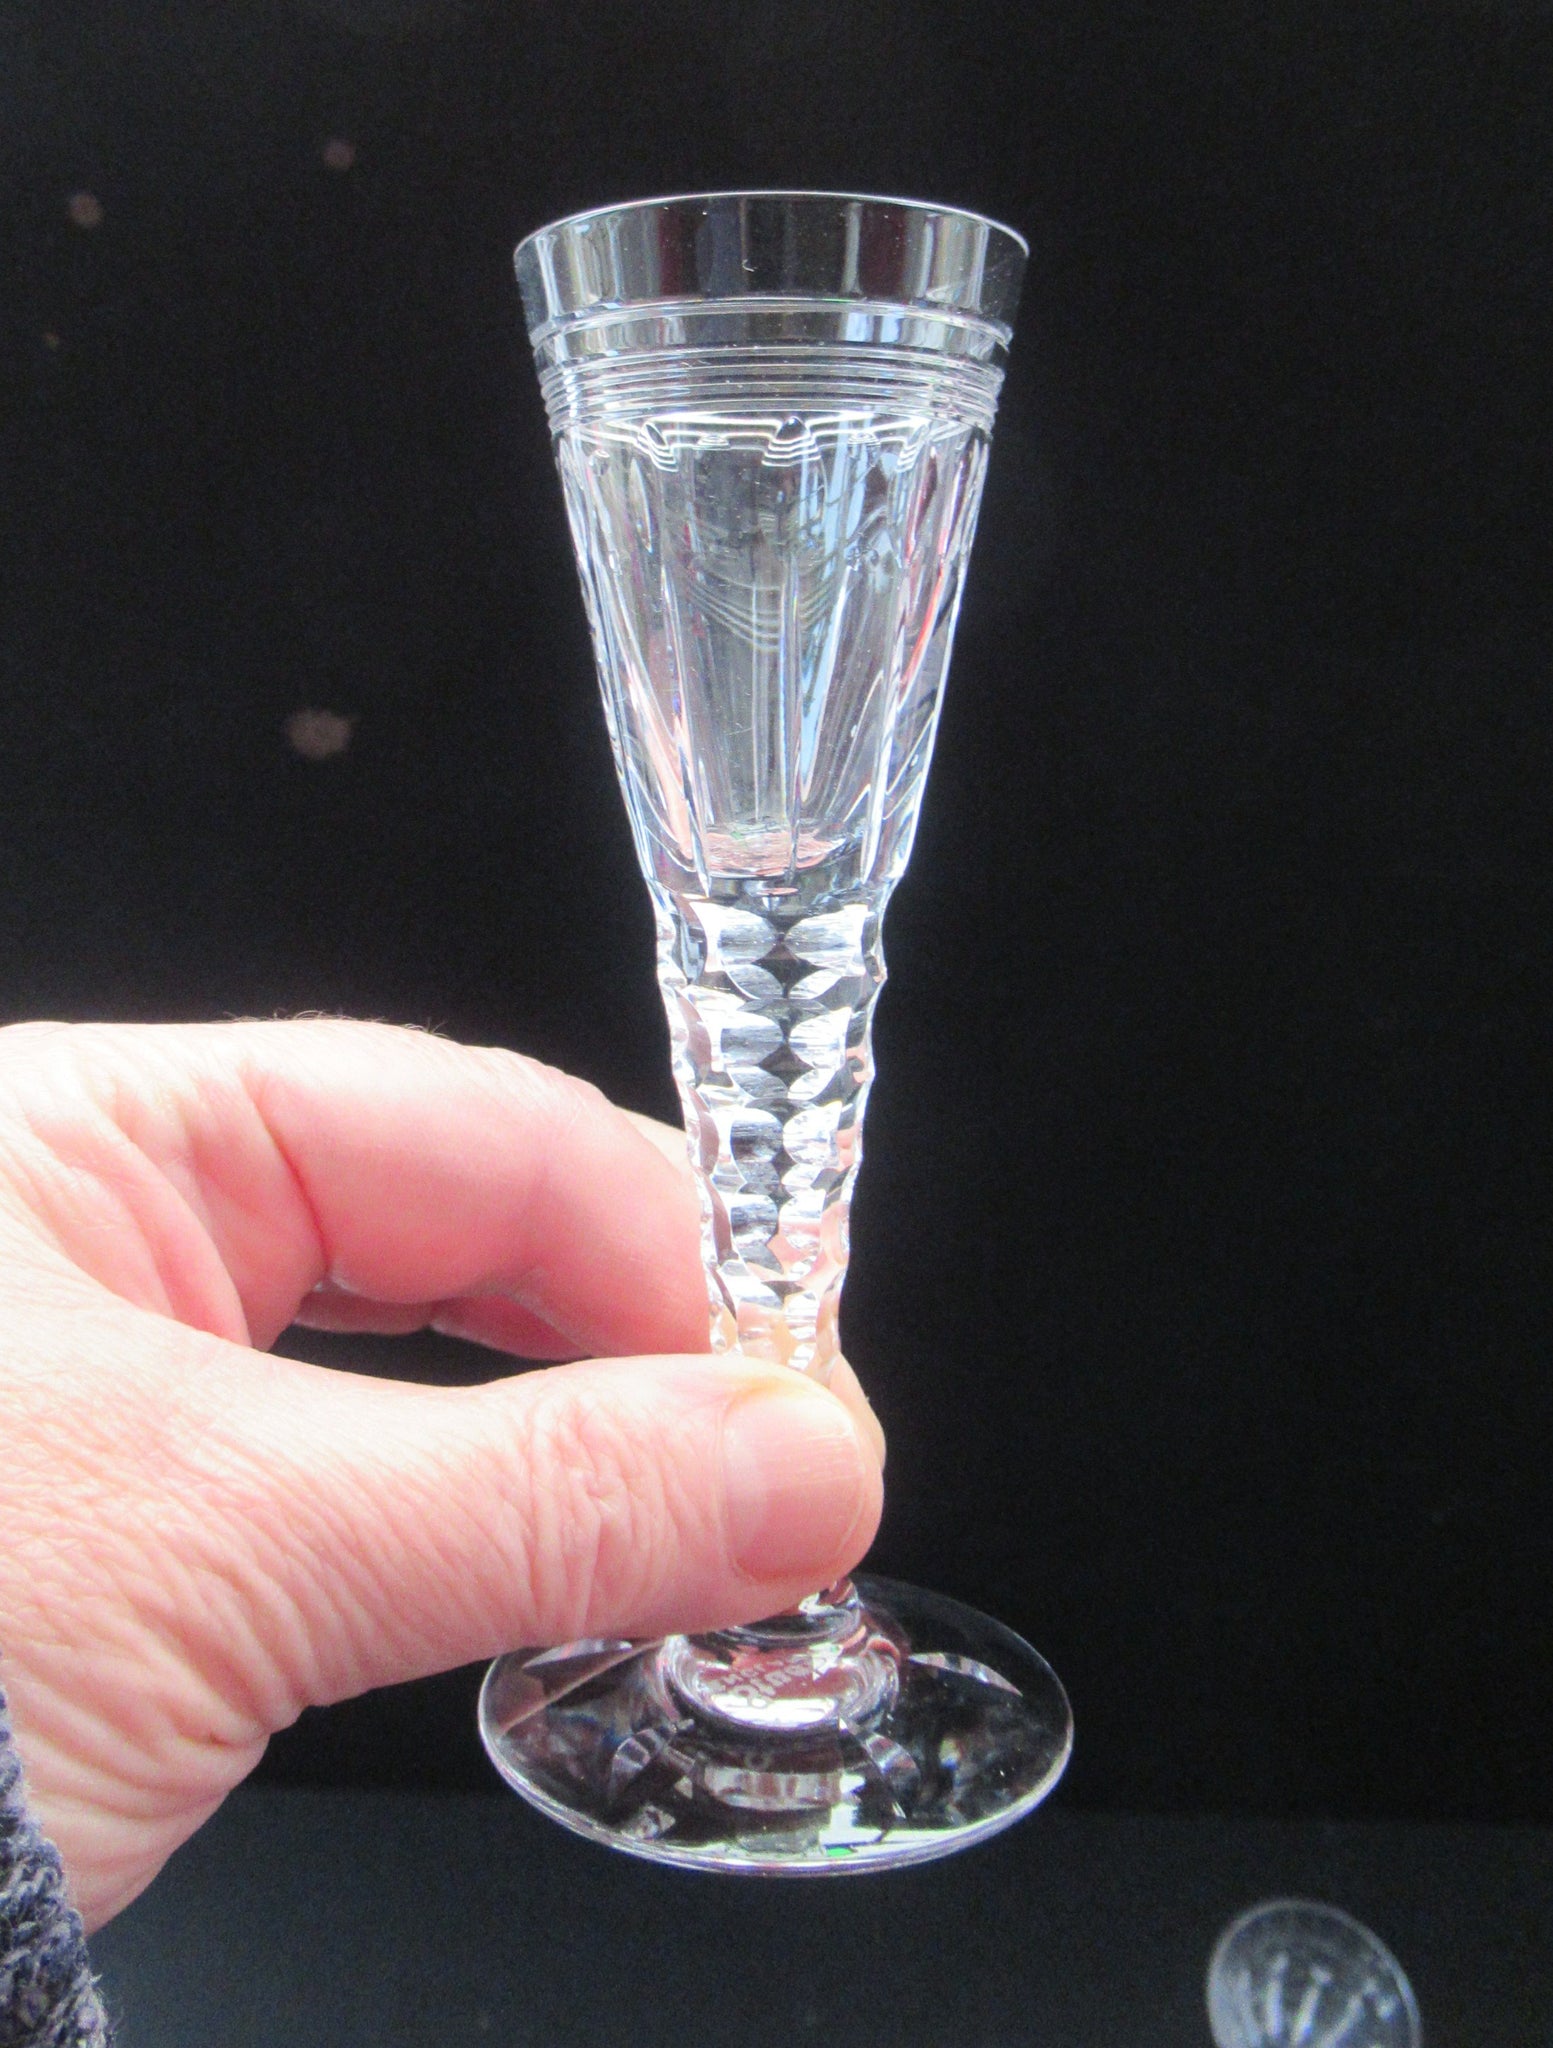 5 Vintage CRYSTAL Wine Glasses, Set of 5, Stuart-england 1950's